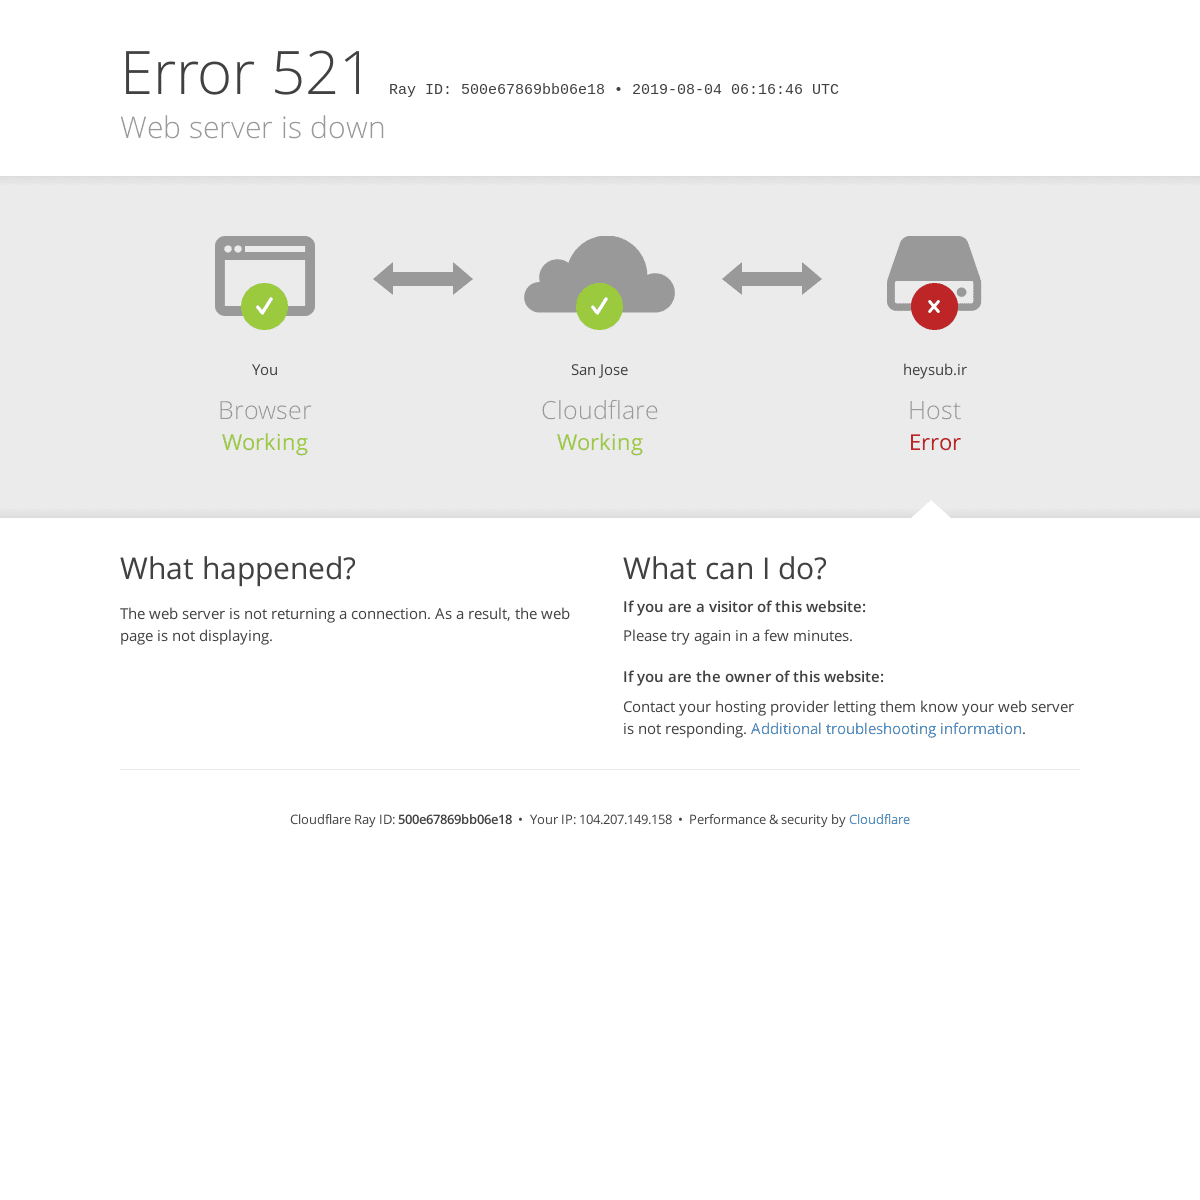 heysub.ir | 521: Web server is down